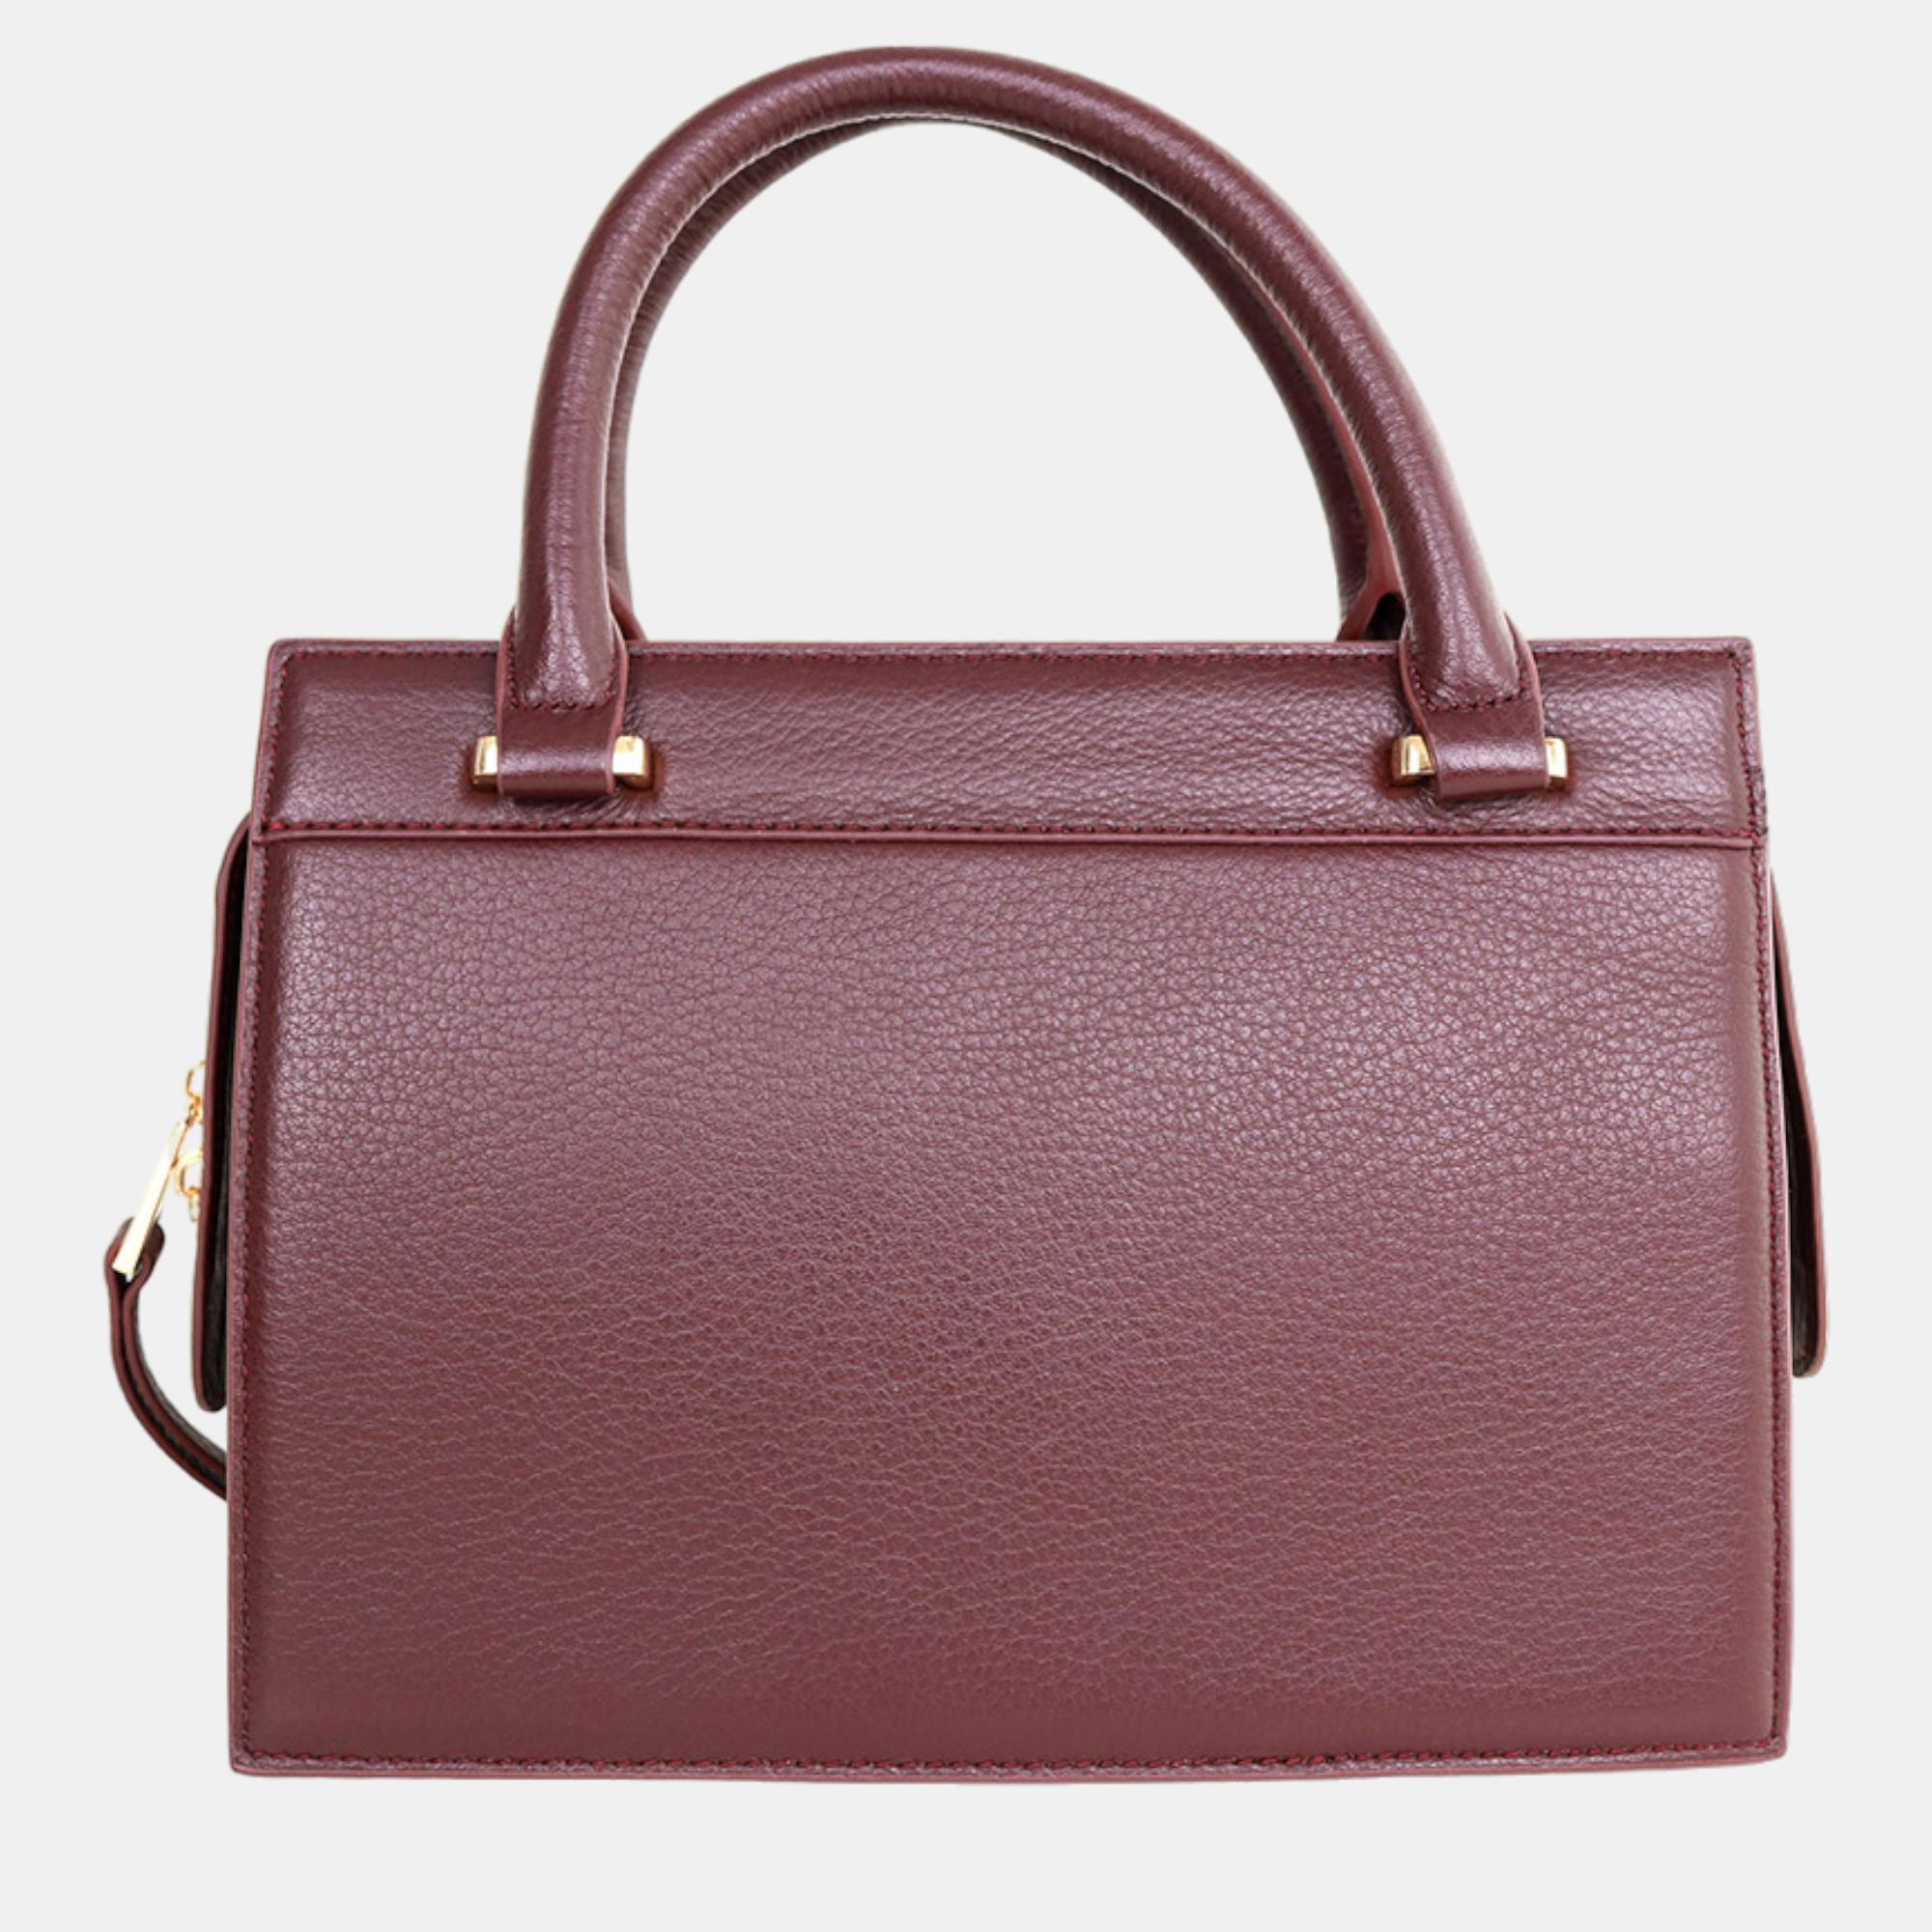 Charriol Chocolate Leather Forever Handbag